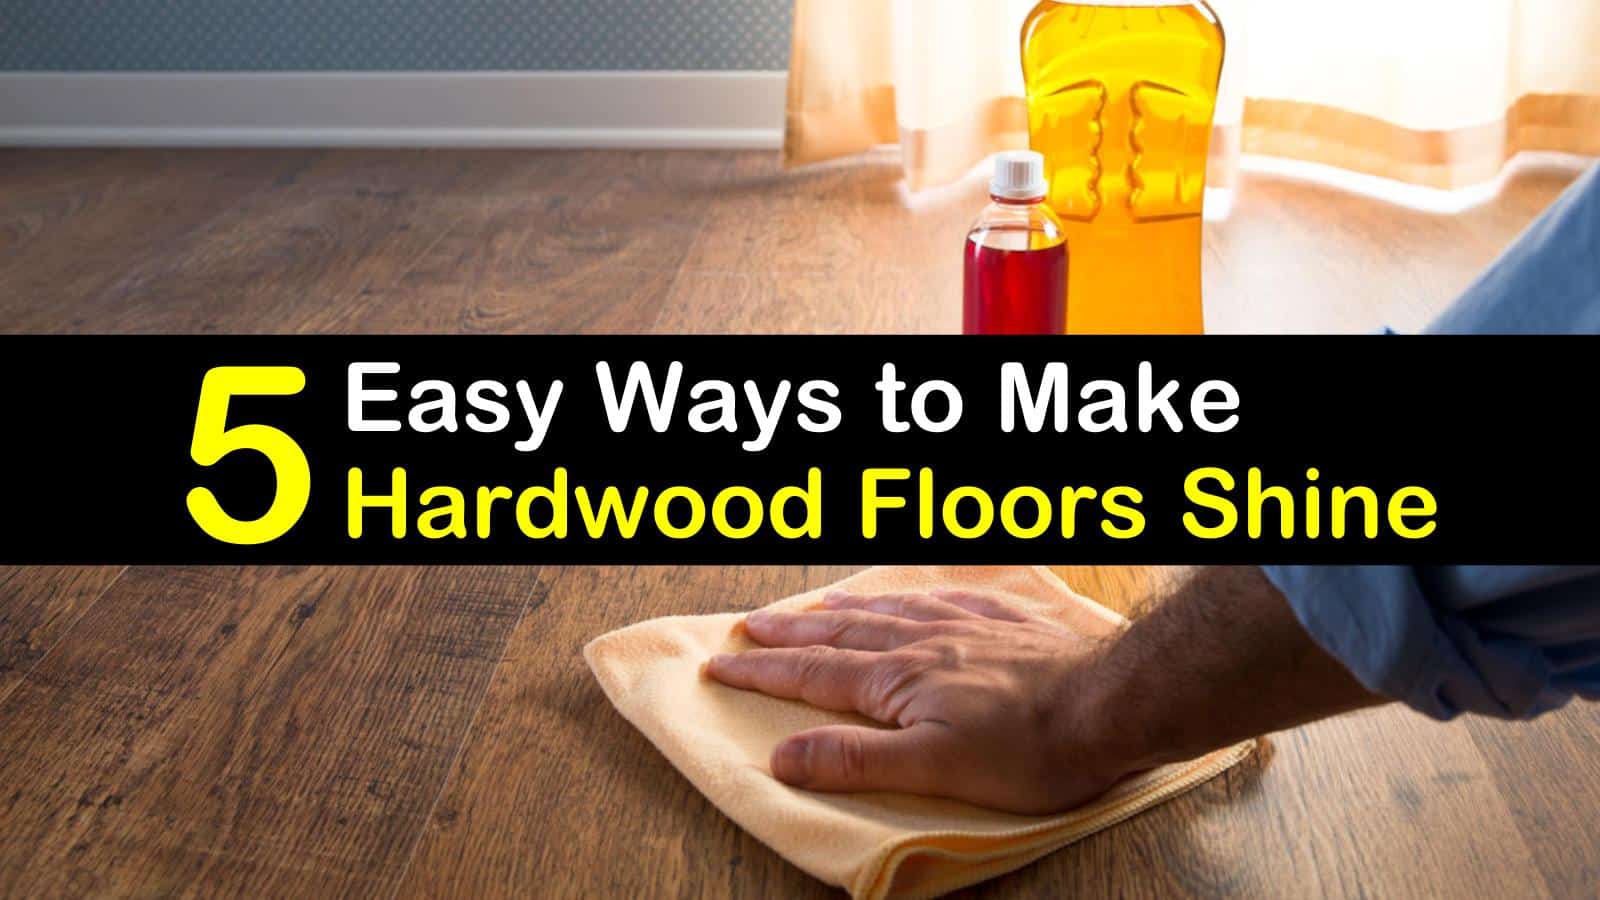 5 Easy Ways To Make Hardwood Floors Shine, How To Make Laminate Wood Floors Shine Again